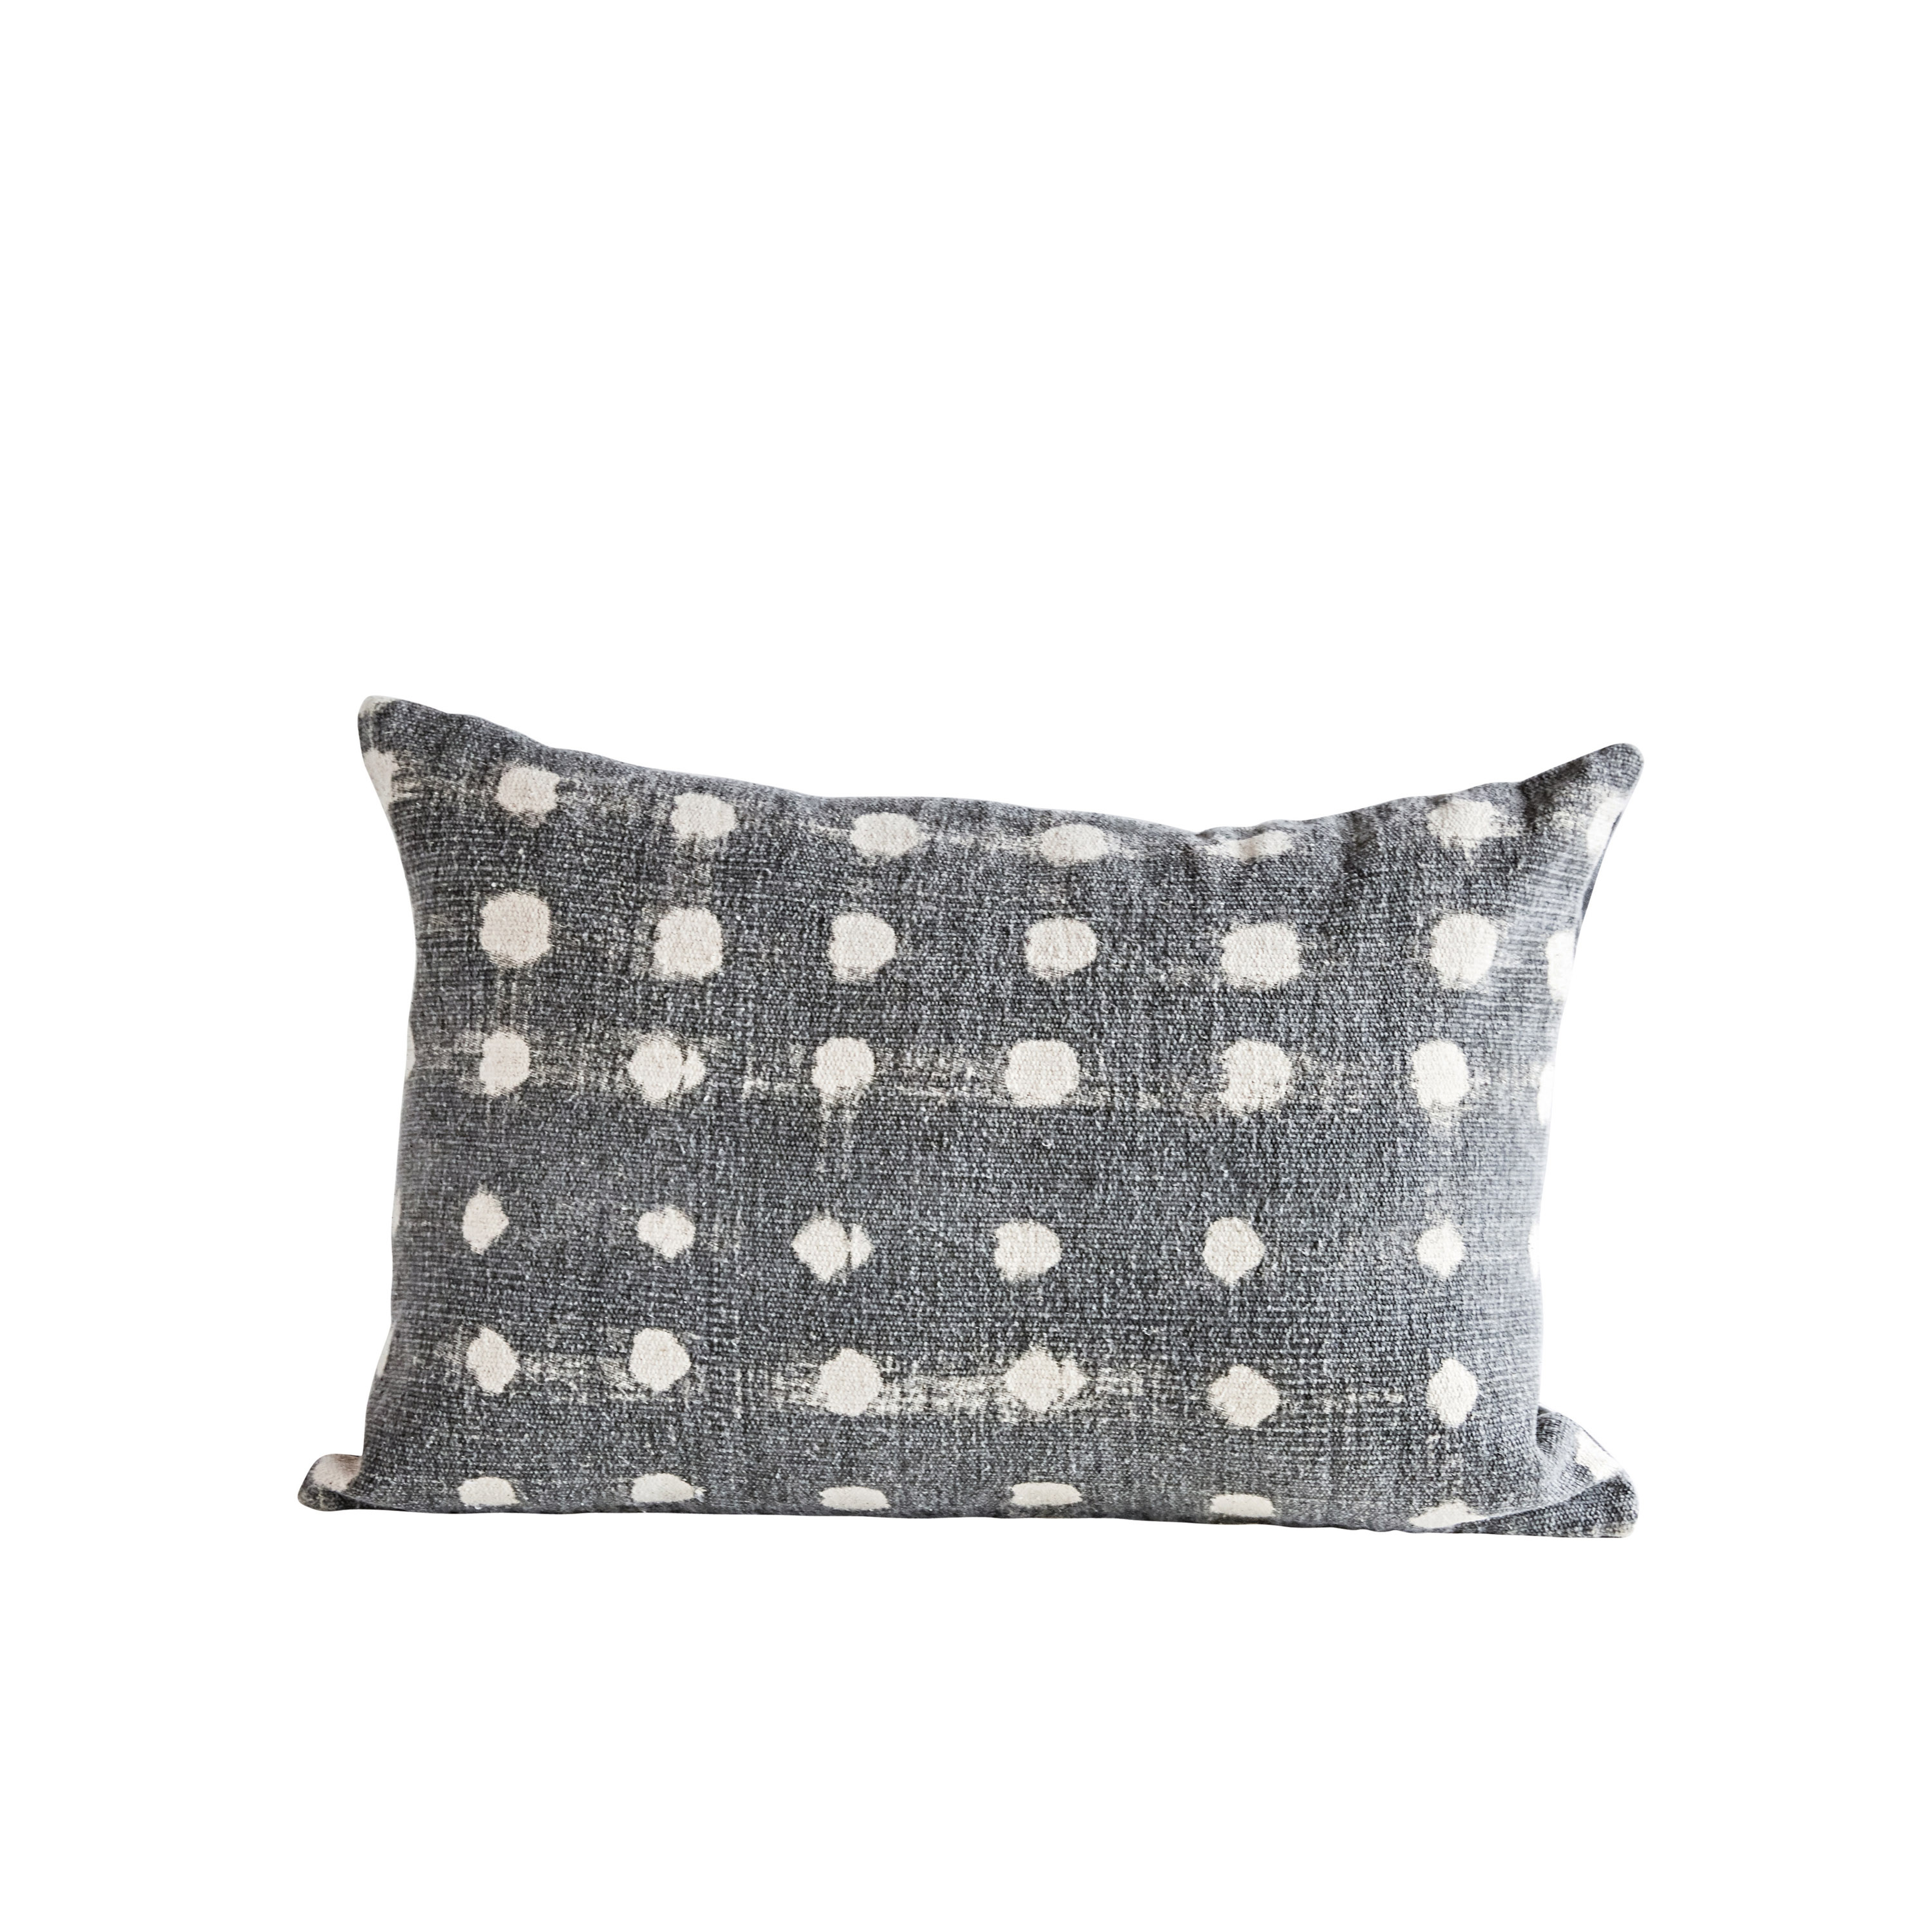 Cotton Slub Pillow with Polka Dots, Gray & Ivory, 24" x 16" - Nomad Home